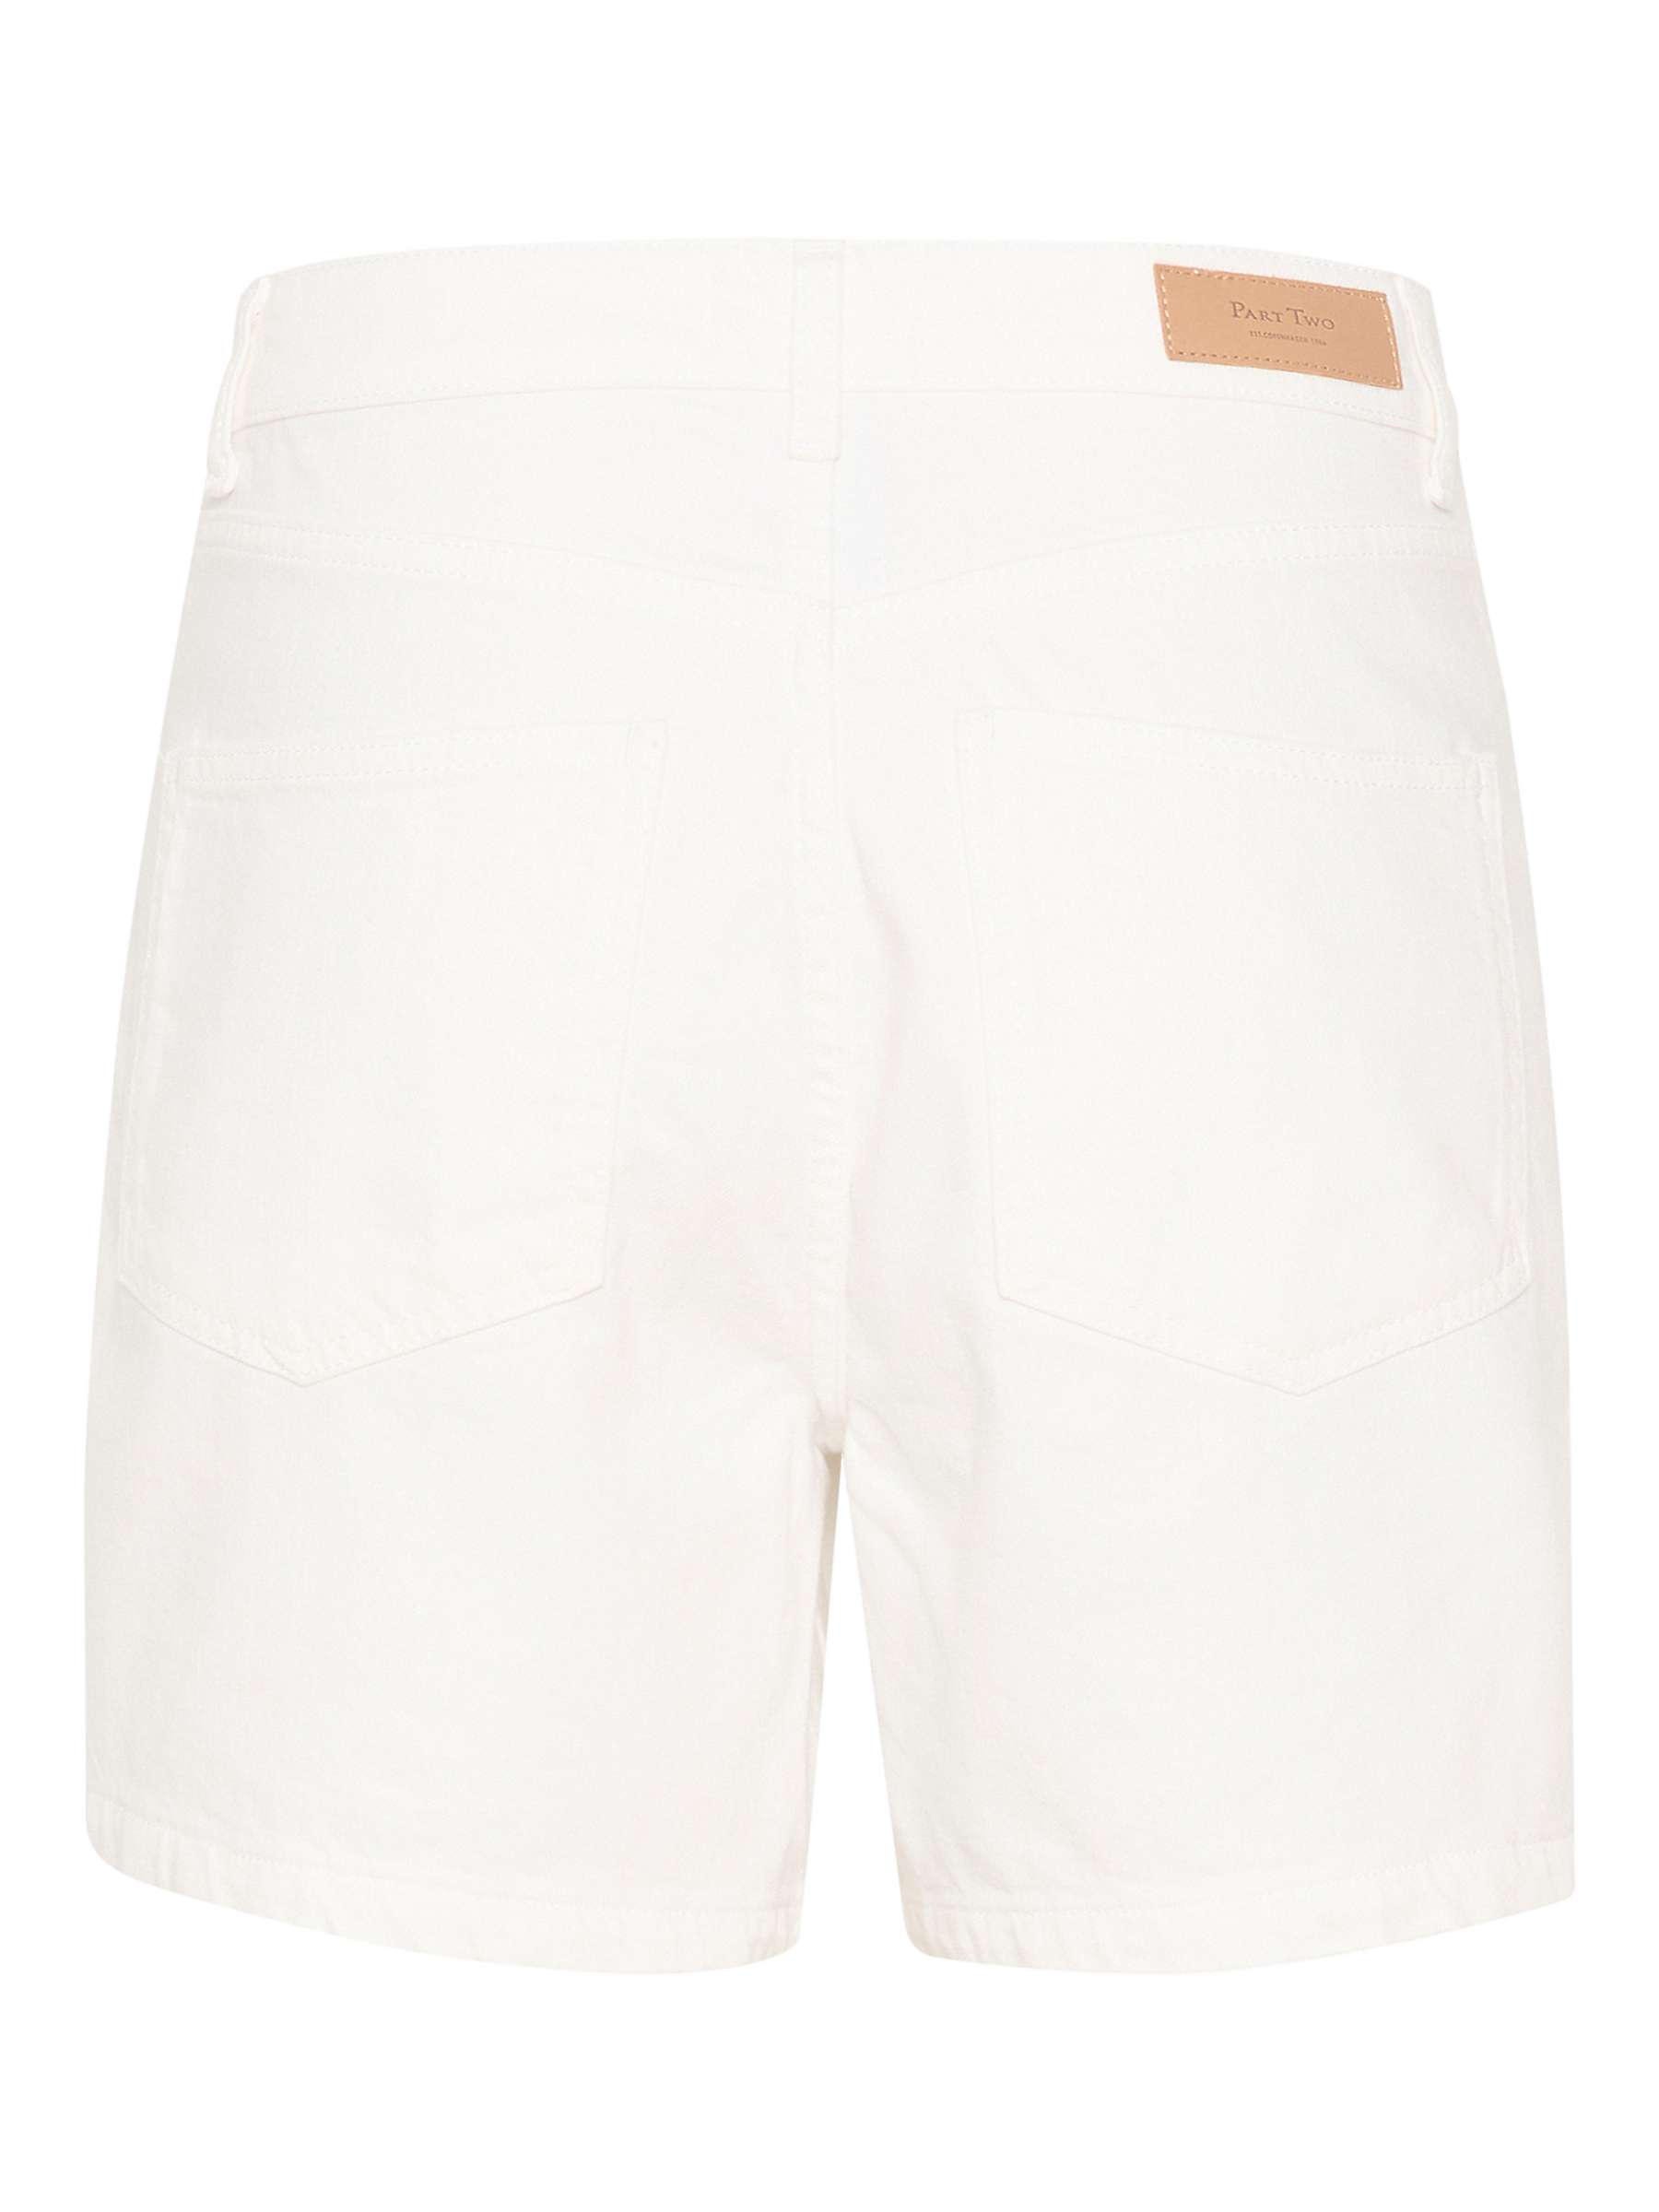 Buy Part Two Gida High Waist Denim Shorts, Bright White Online at johnlewis.com